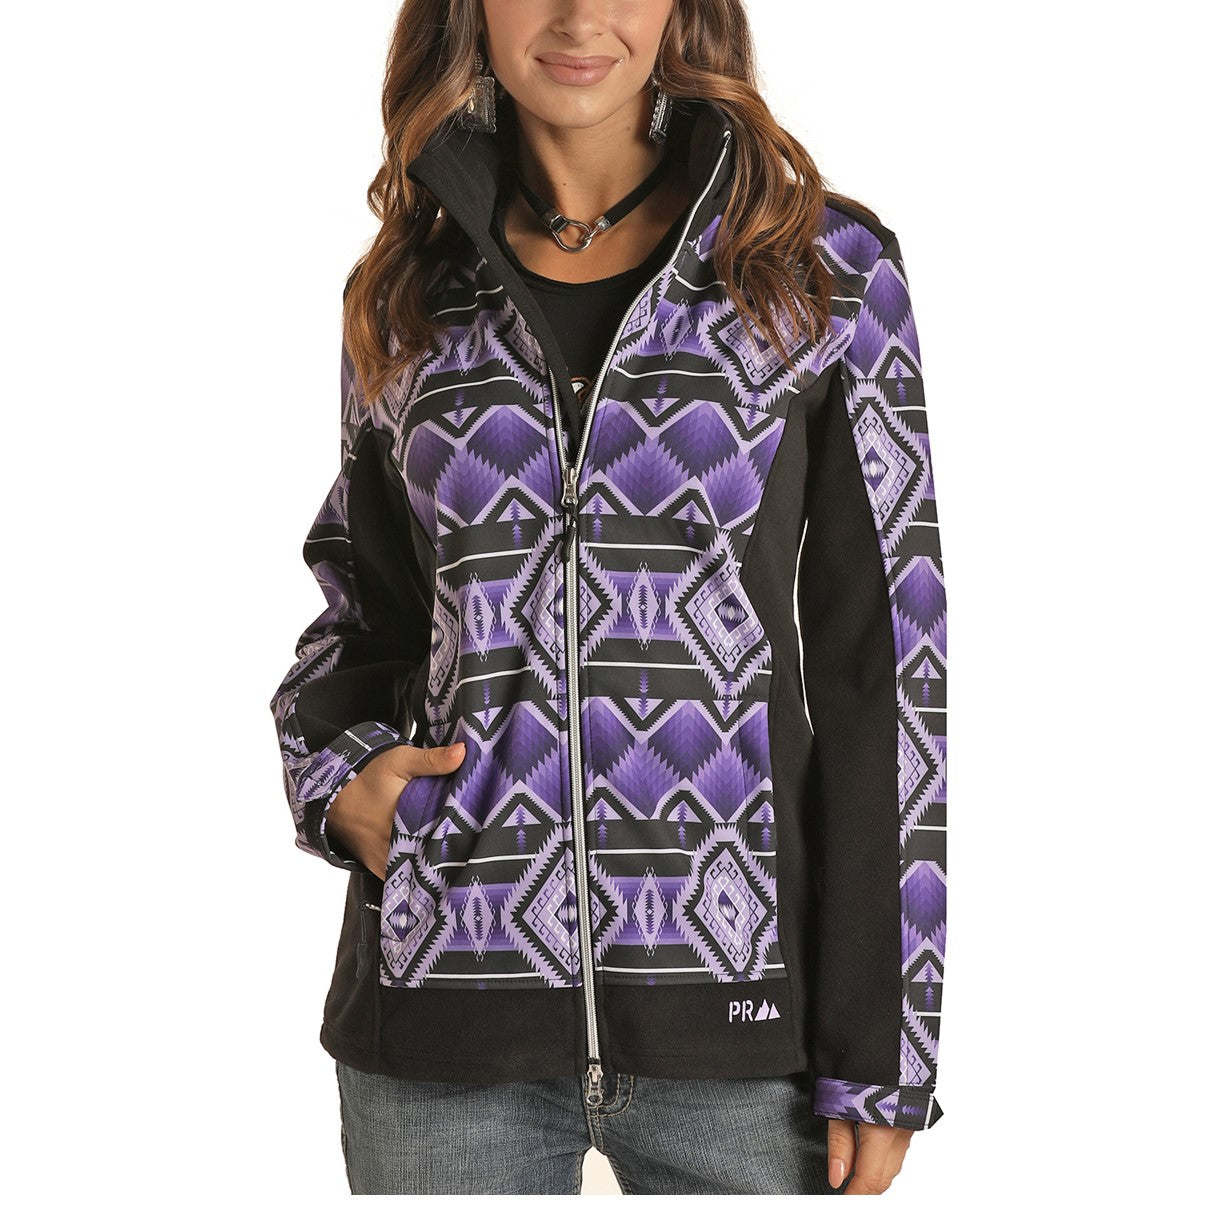 Powder River Ladies Aztec Purple Softshell Jacket 52-1048-52